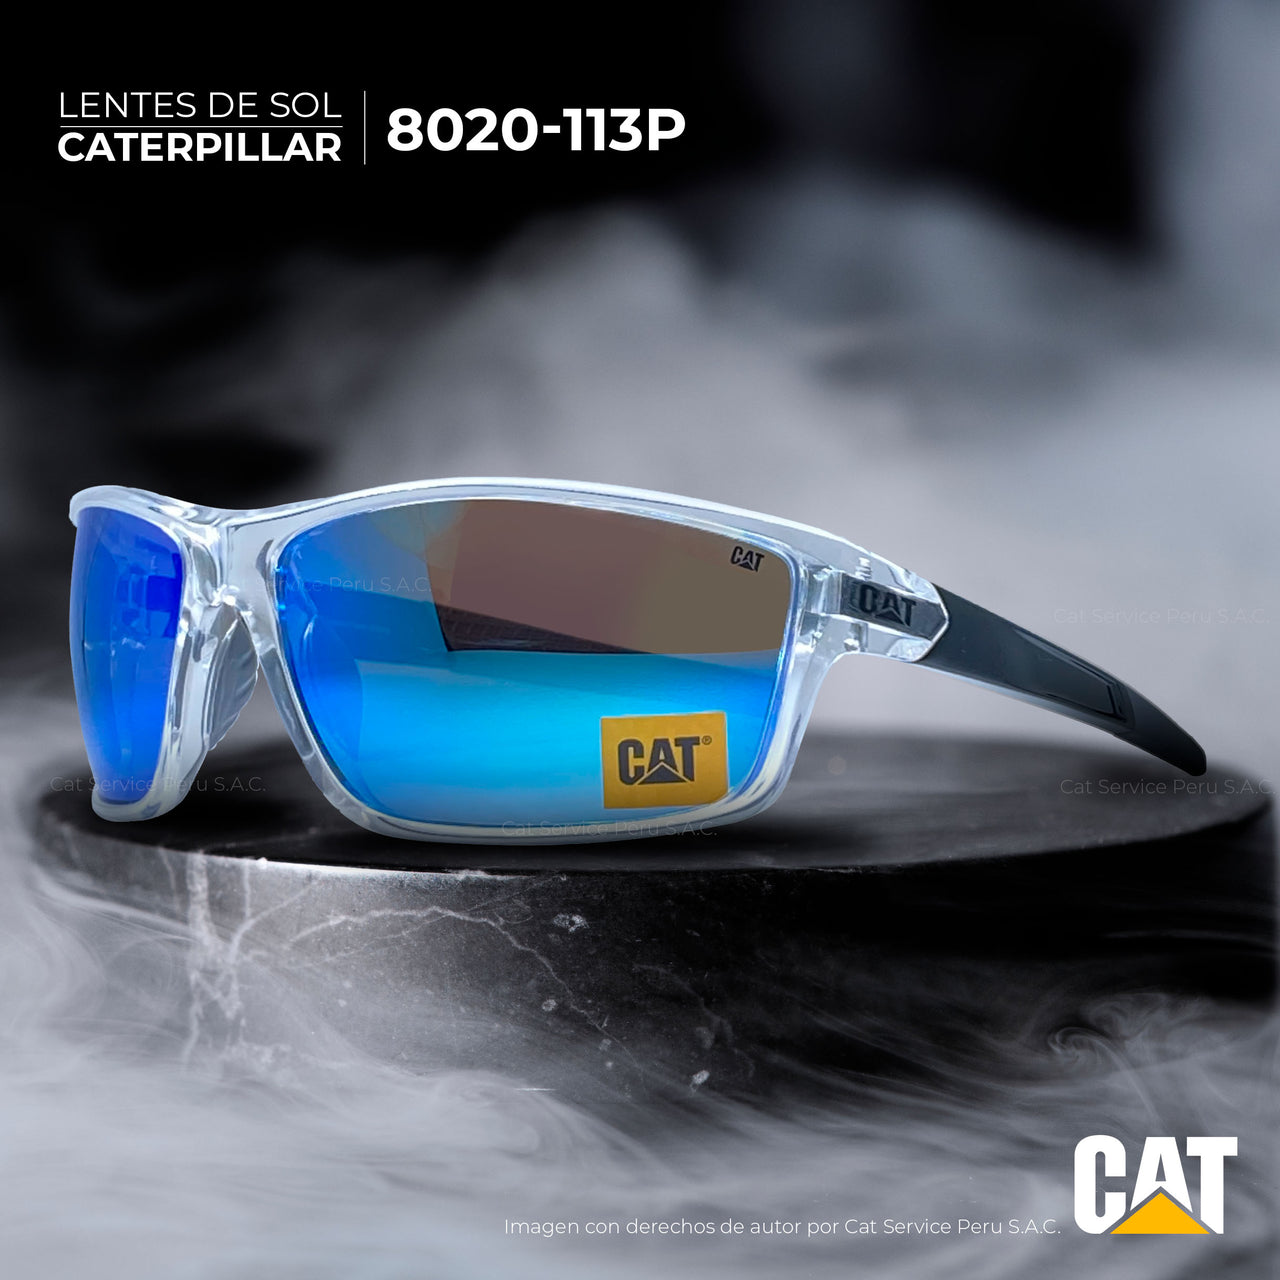 Cat CTS-8020-113P Polarized Blue Moons Sunglasses 